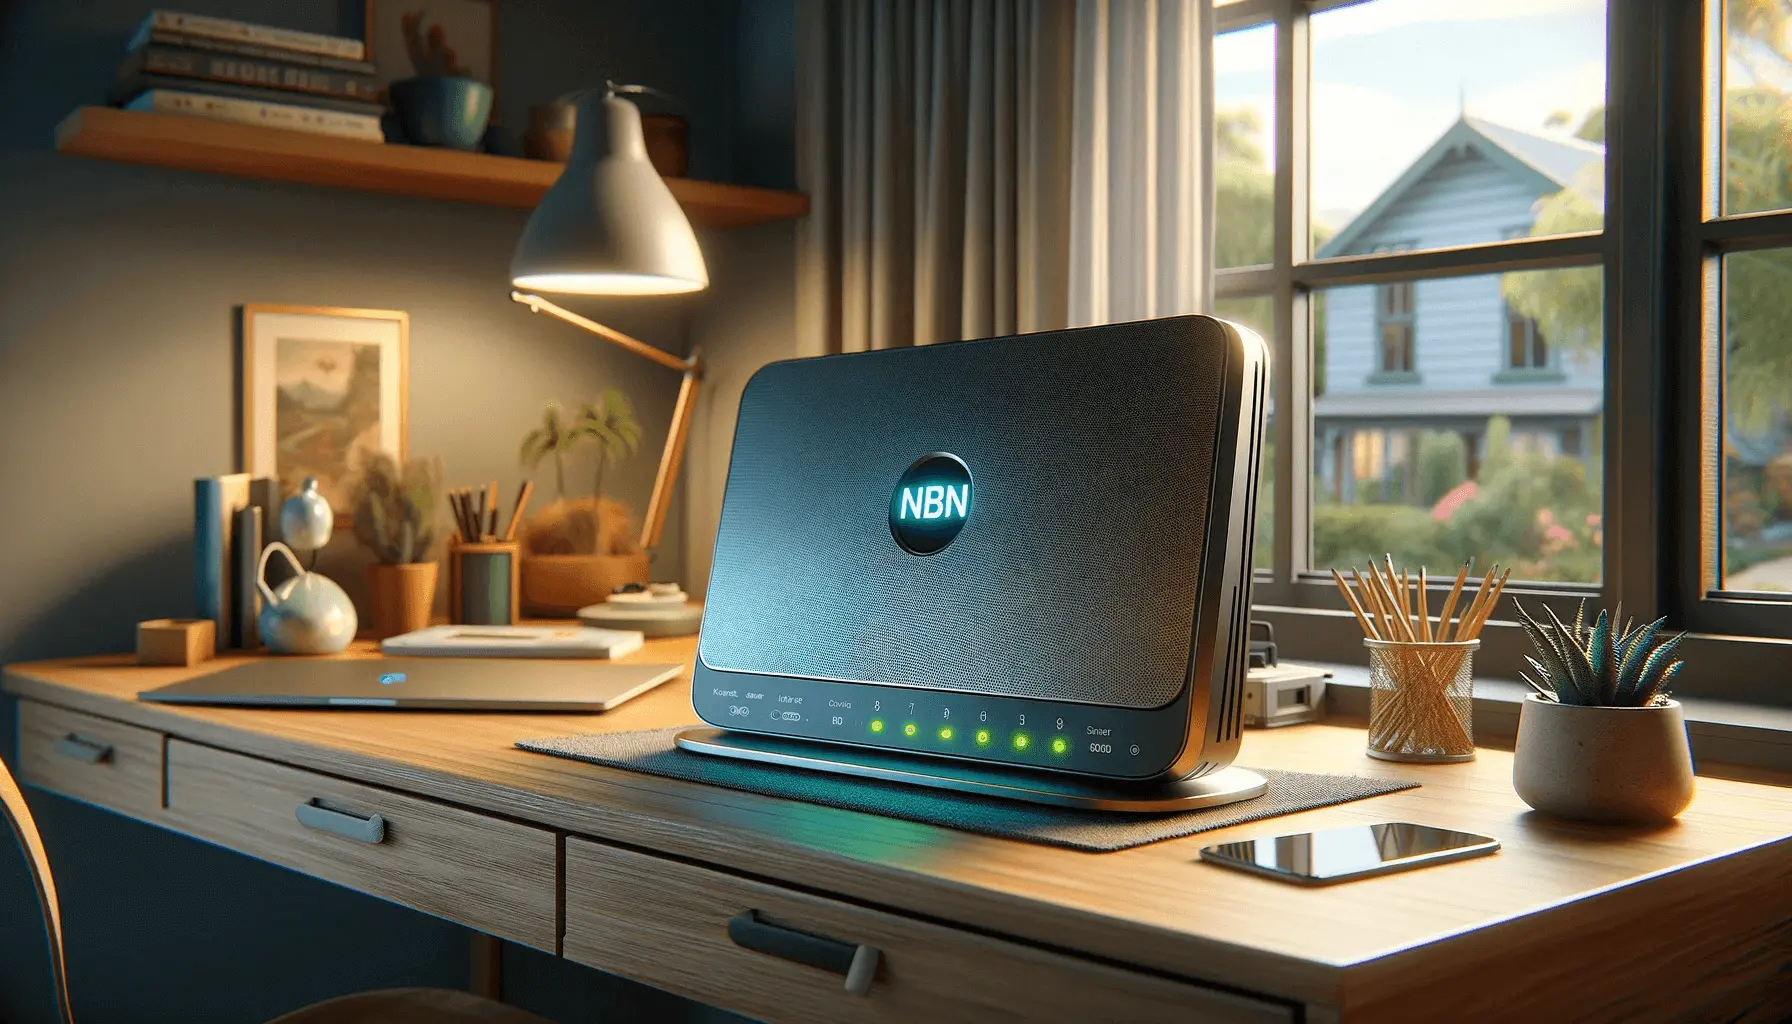 NBN (National Broadband Network) router